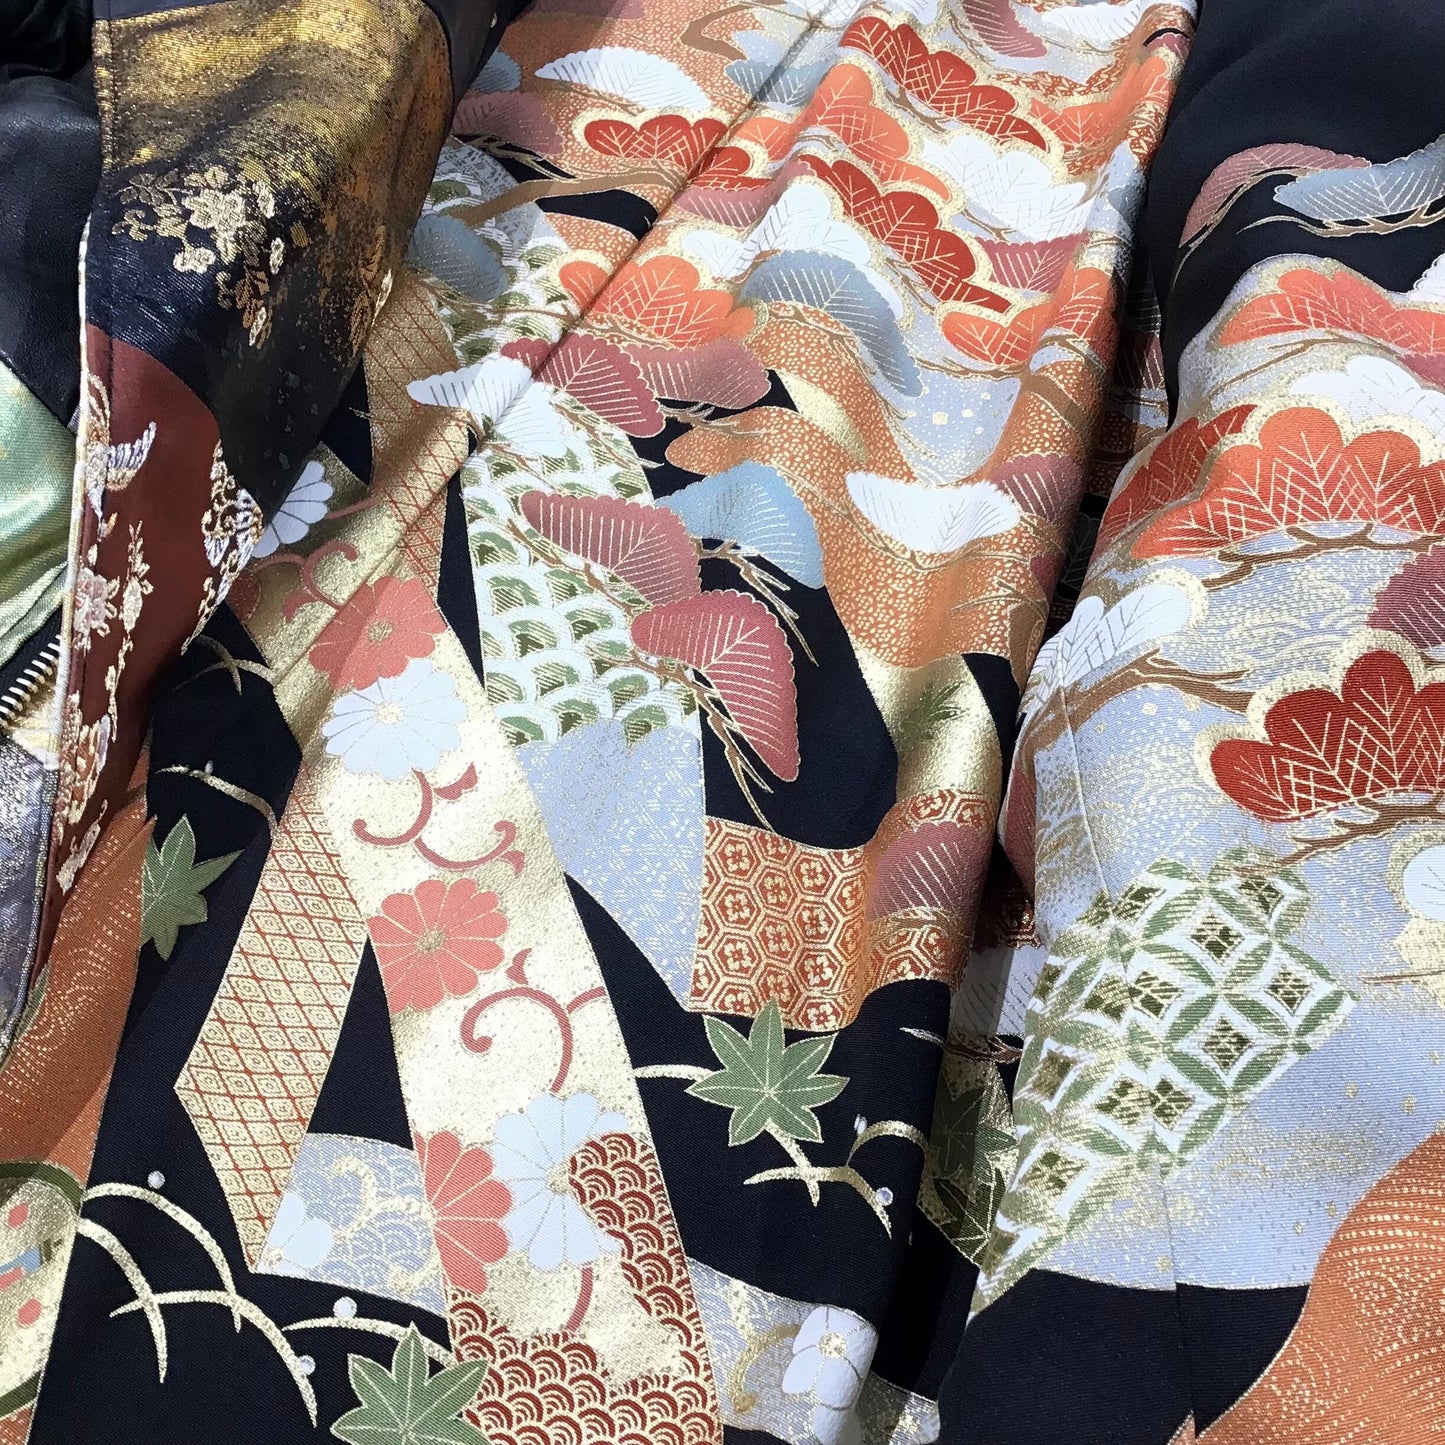 Bespoke Hypebeast Japanese Remake Vintage Handmade Custom One and Only One Cote Mer Wagara Upcycle Sustainable Street Fashion Embroidered Embroidery Kimono Obi Boro Style  x Leather Biker Riders Blouson Jacket ( Size : XL )